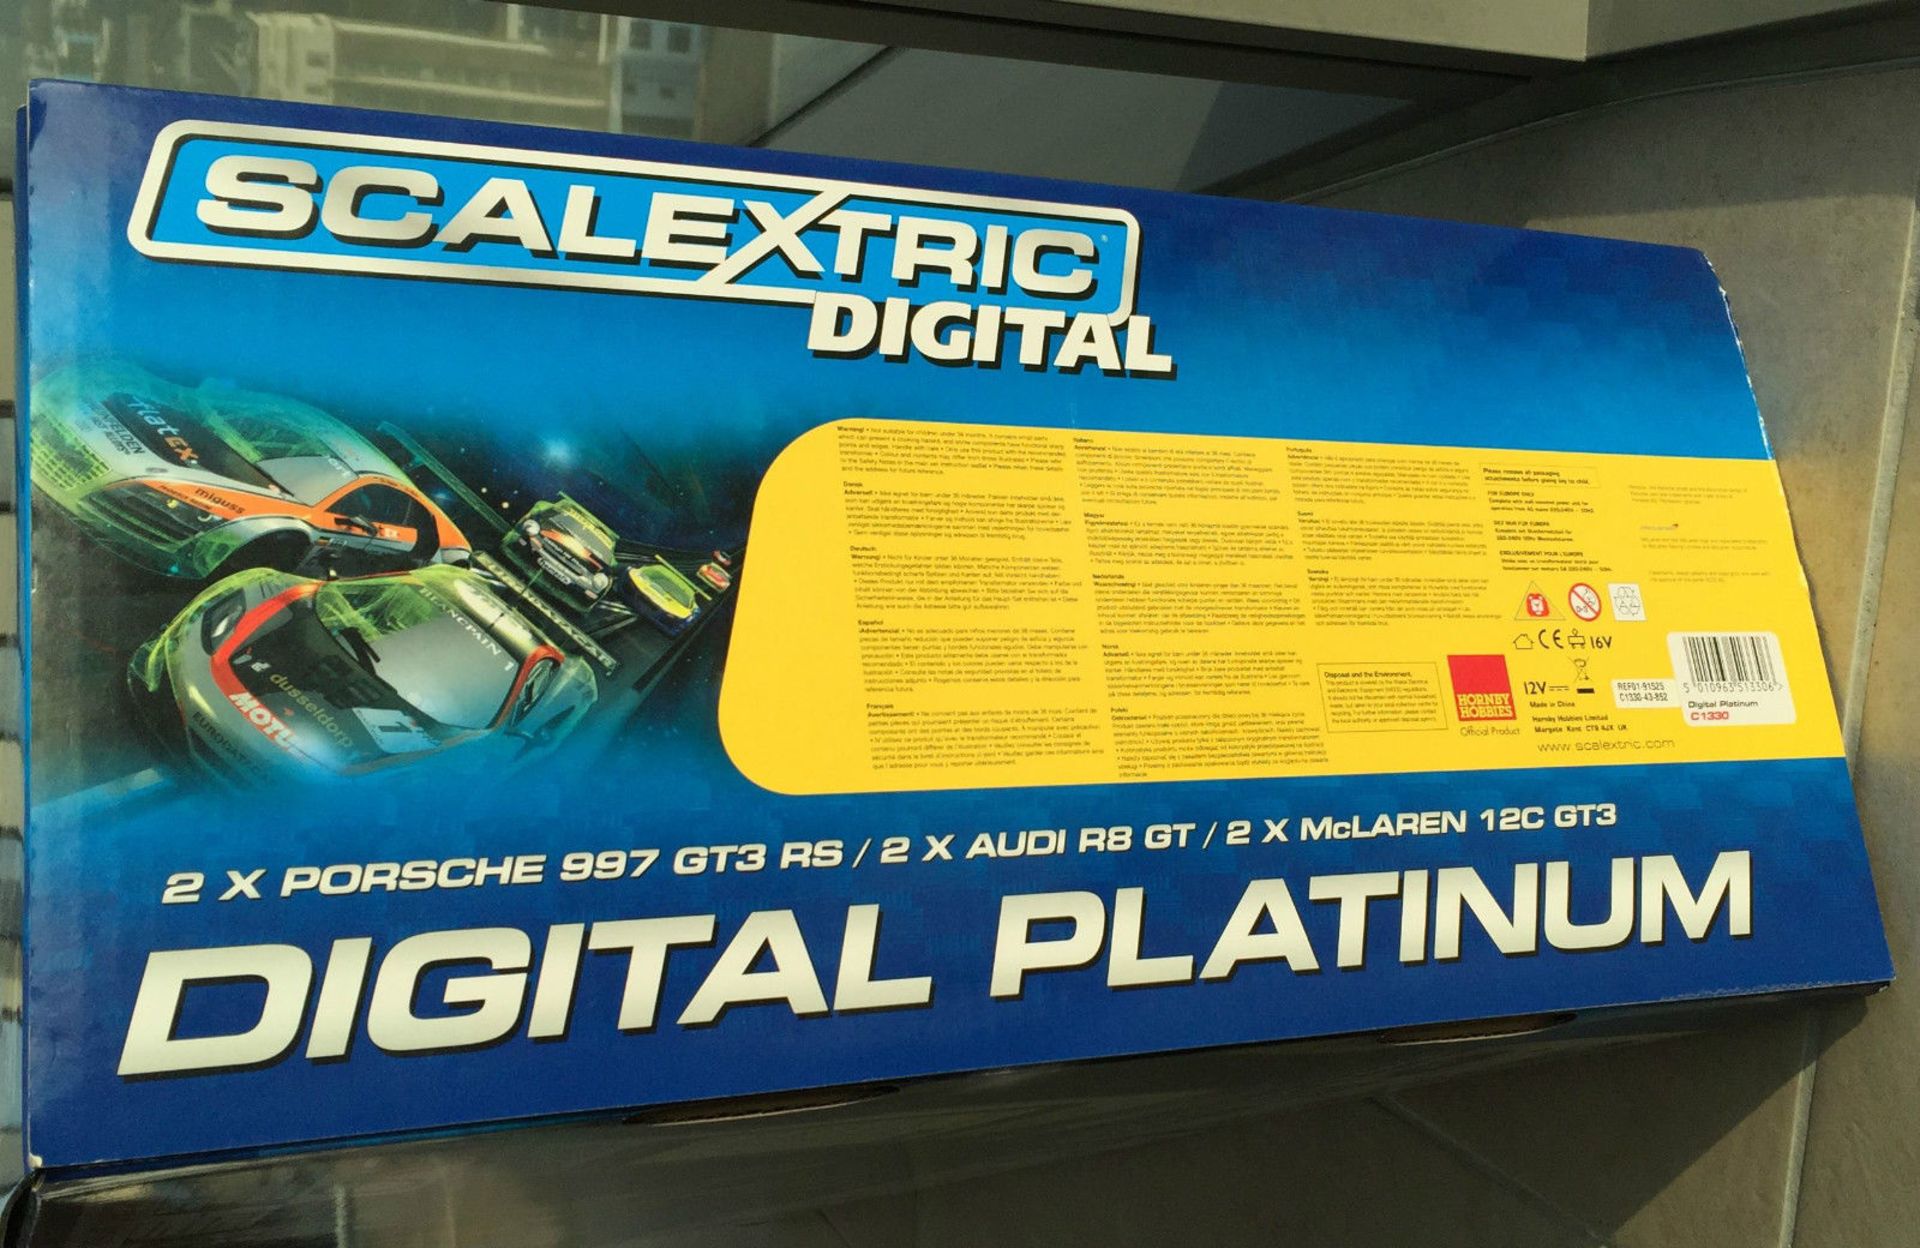 Scalextric Digital Platinum
1:32 Scale
6 cars included
New unused unopened - Image 5 of 9